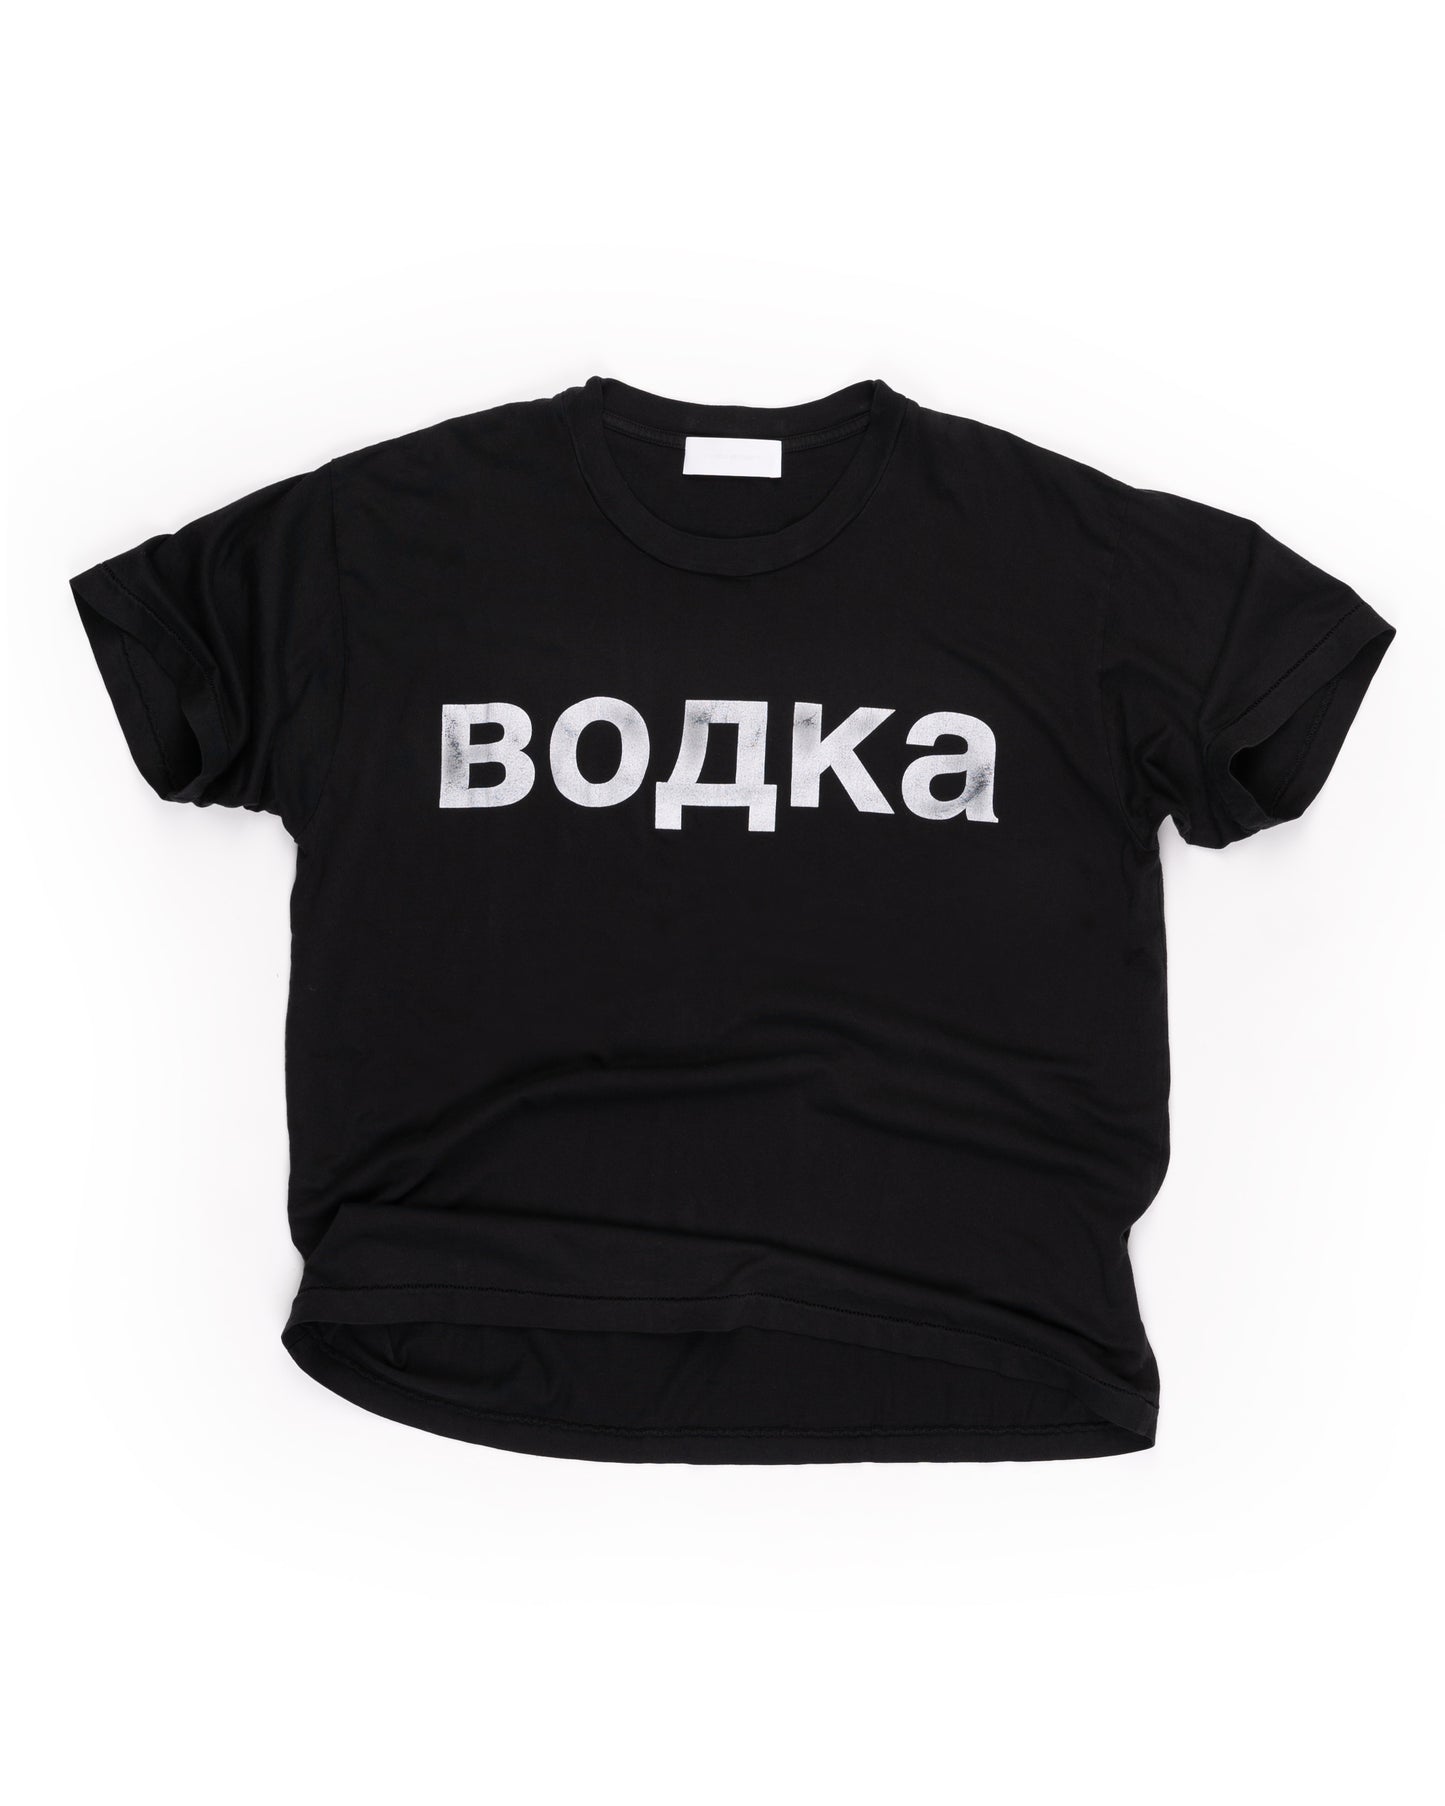 Bodka T-shirt: Black